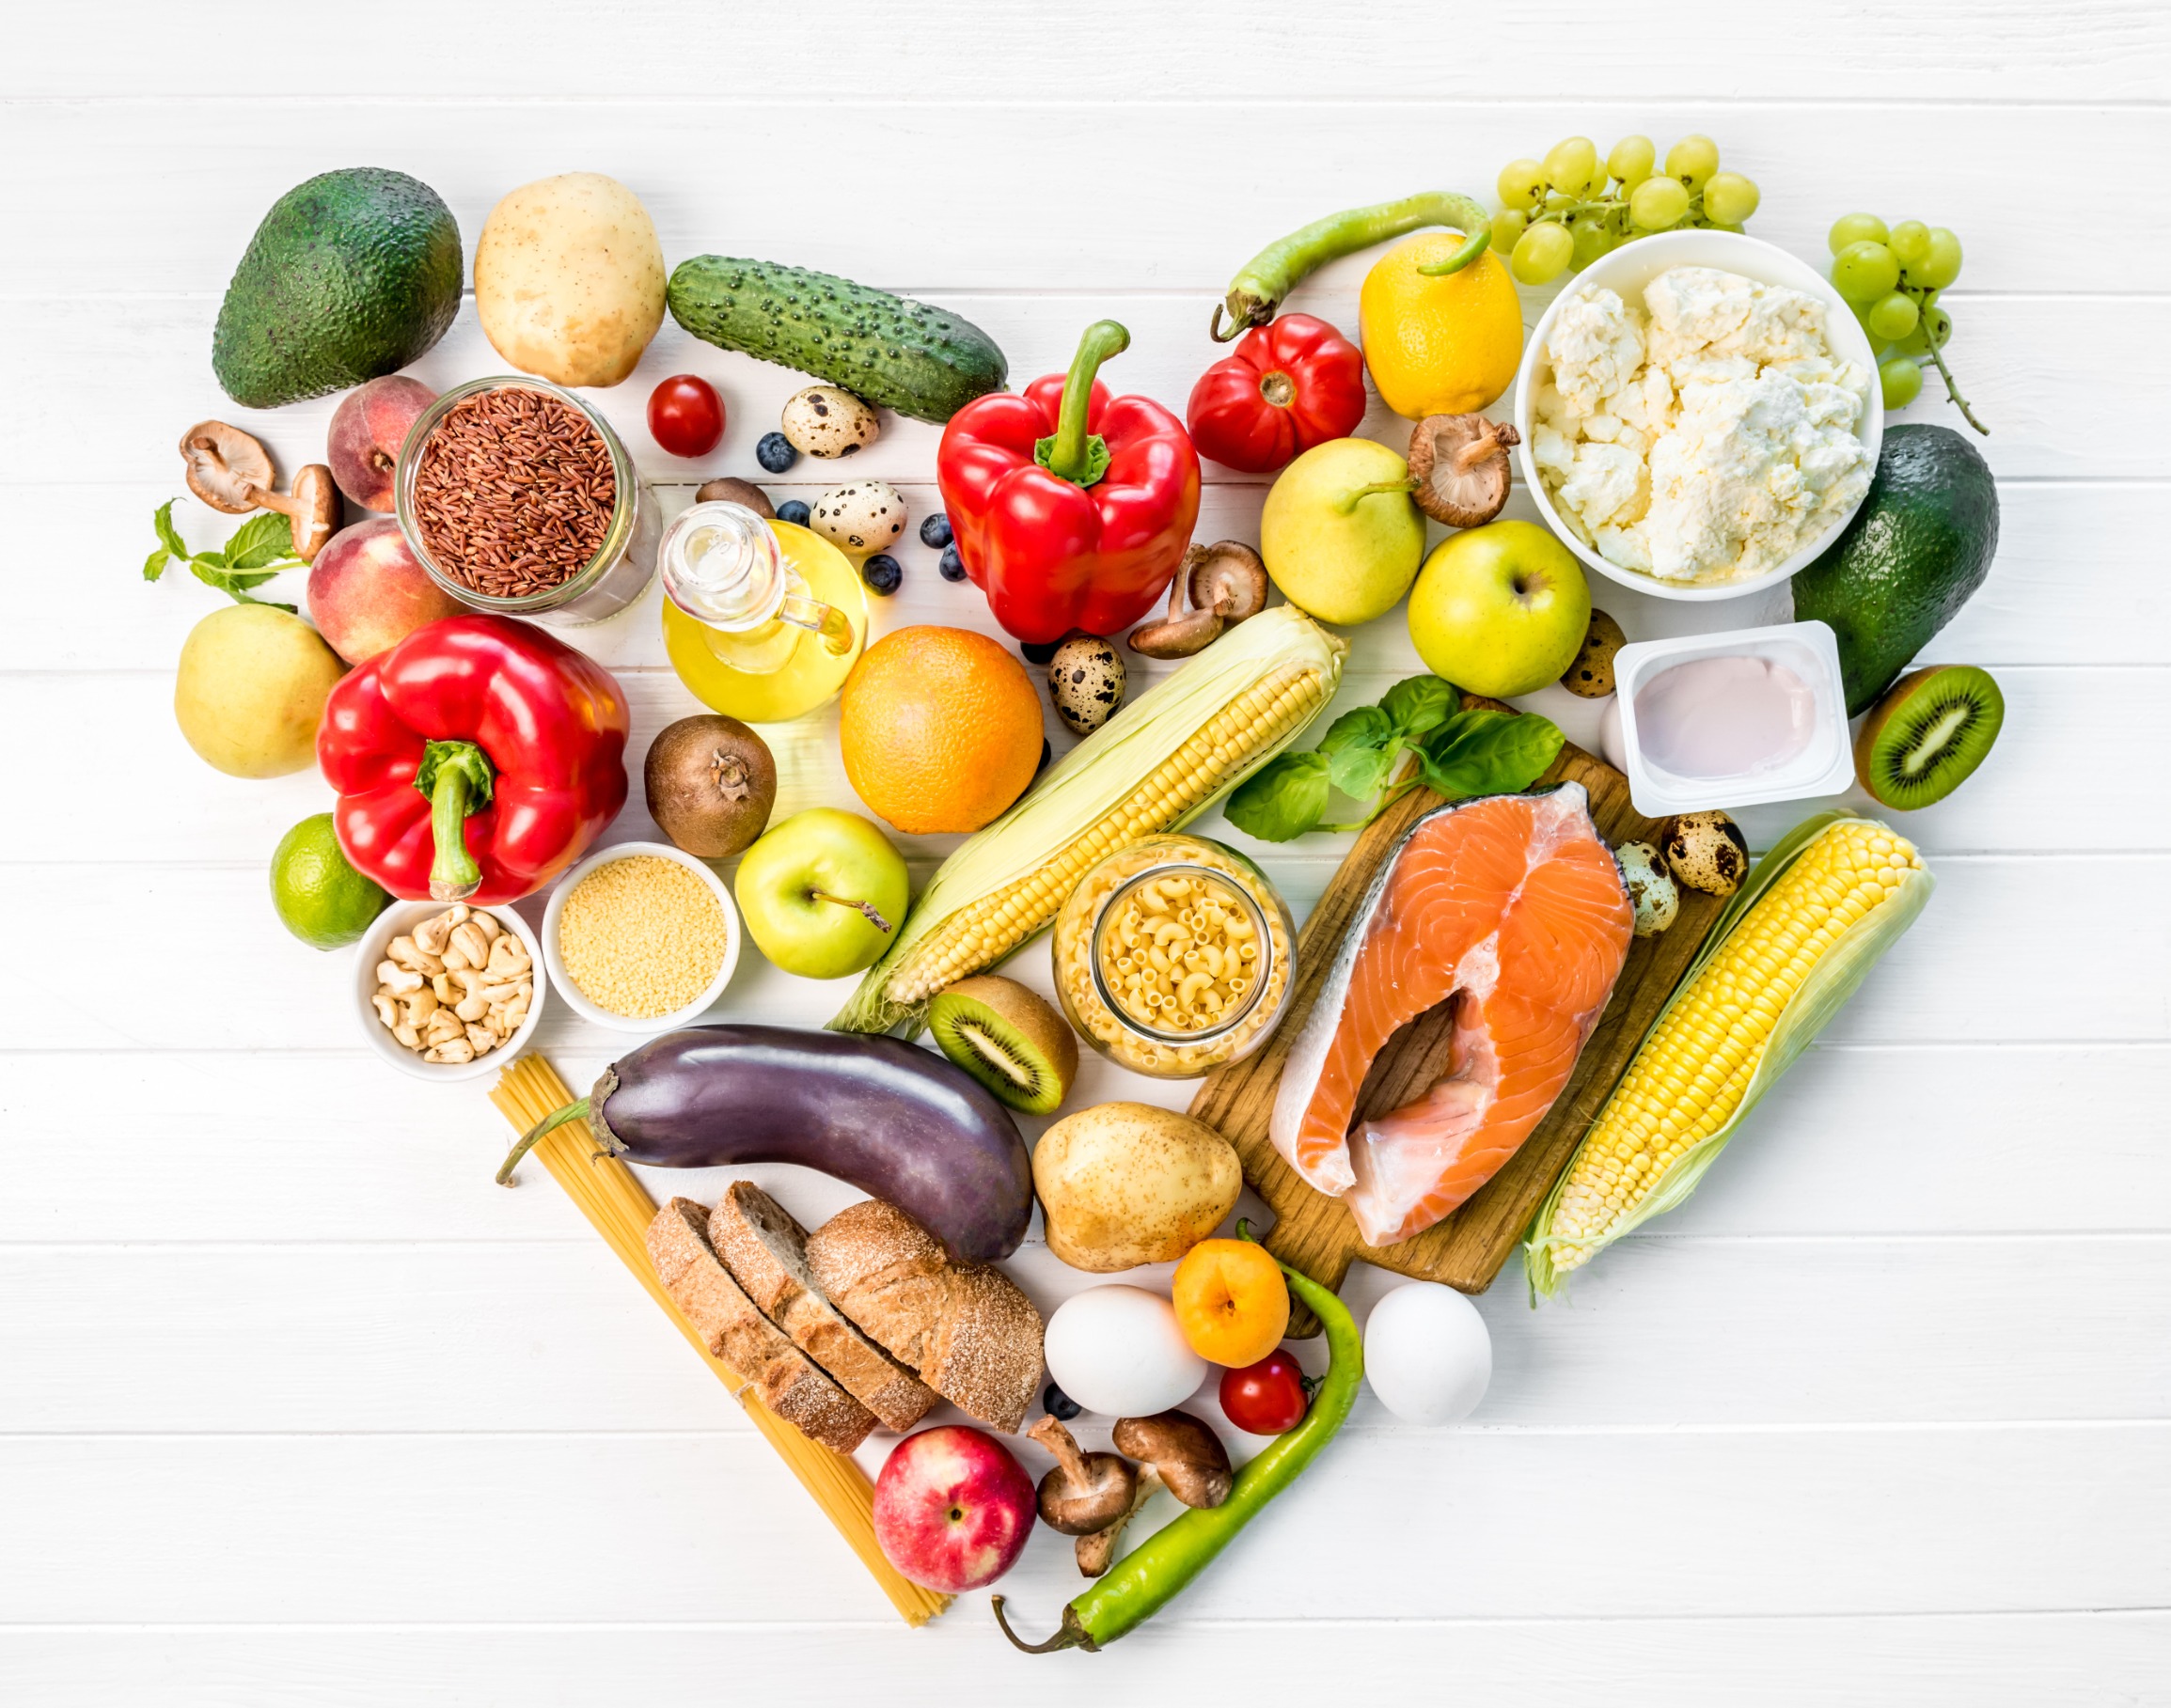 Nutritarian diet with a heart shape full of veg